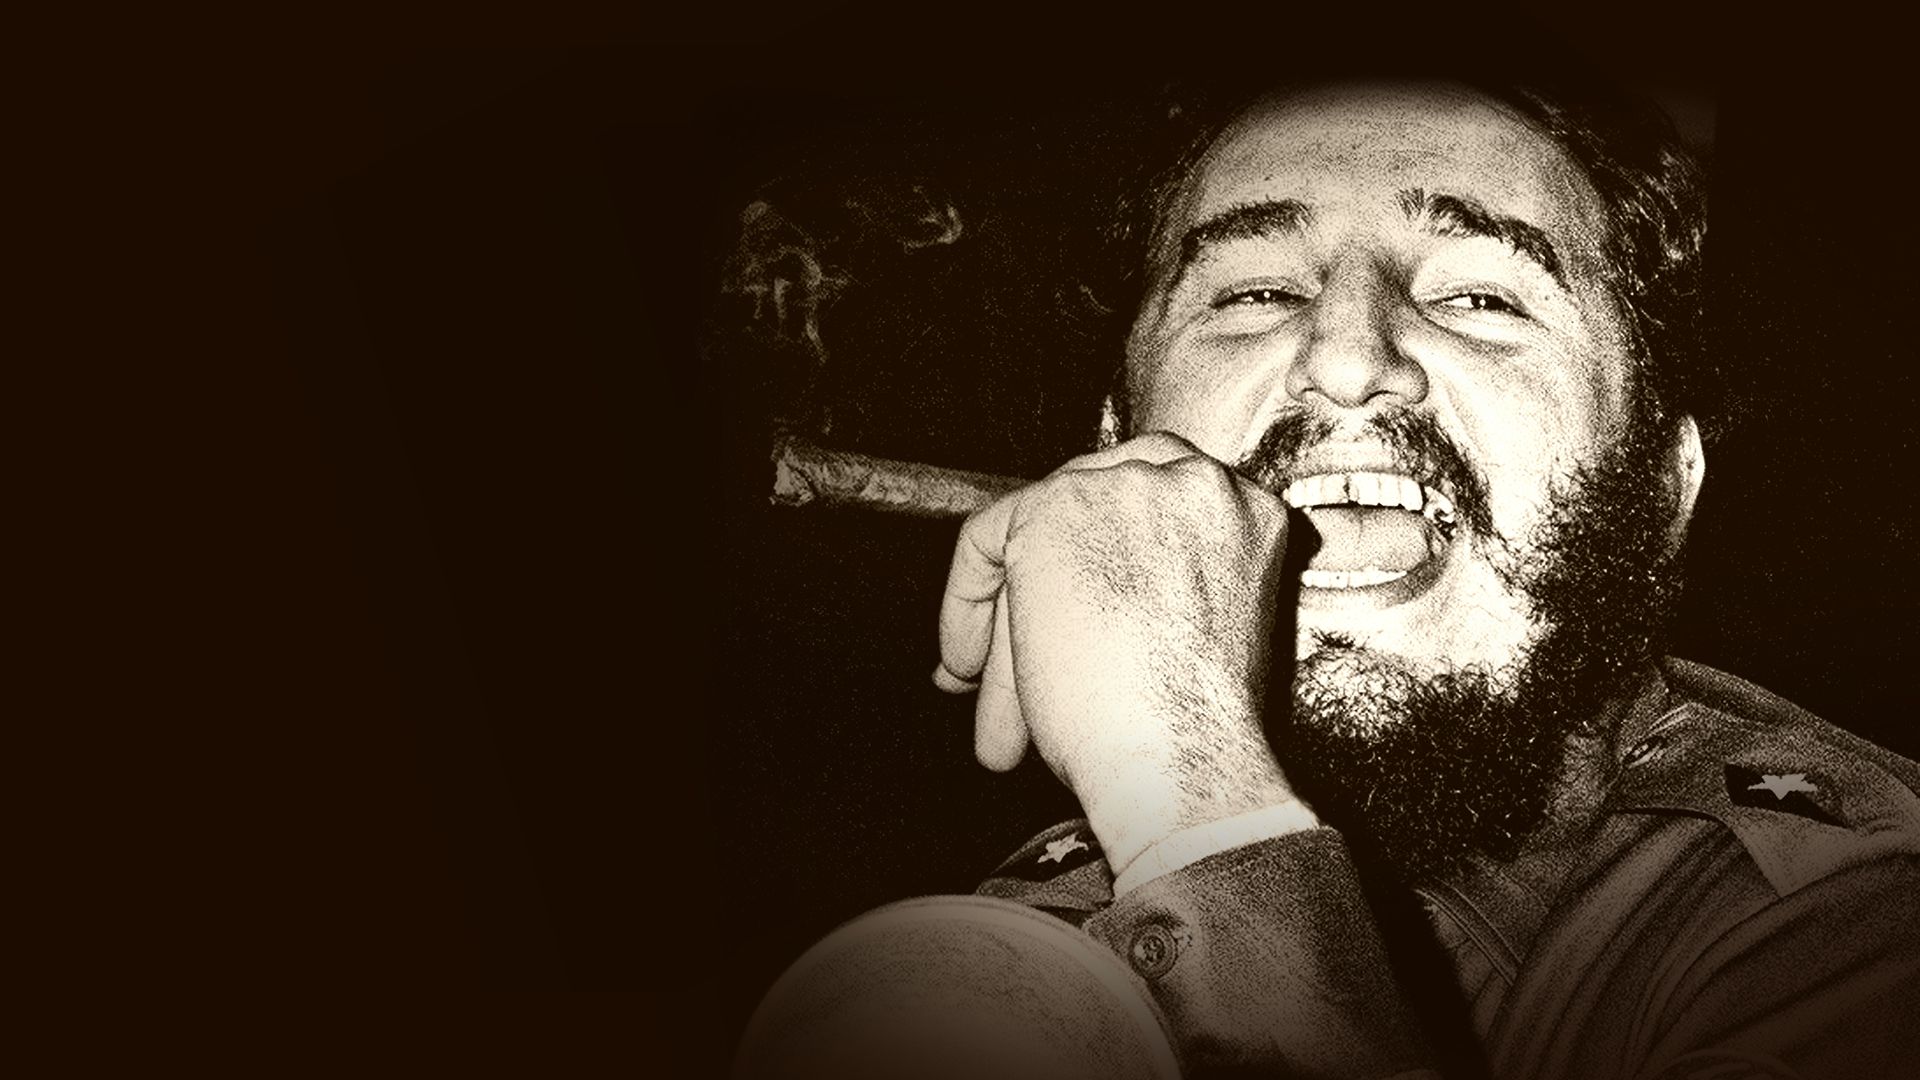 Fidel Castro - IMDb